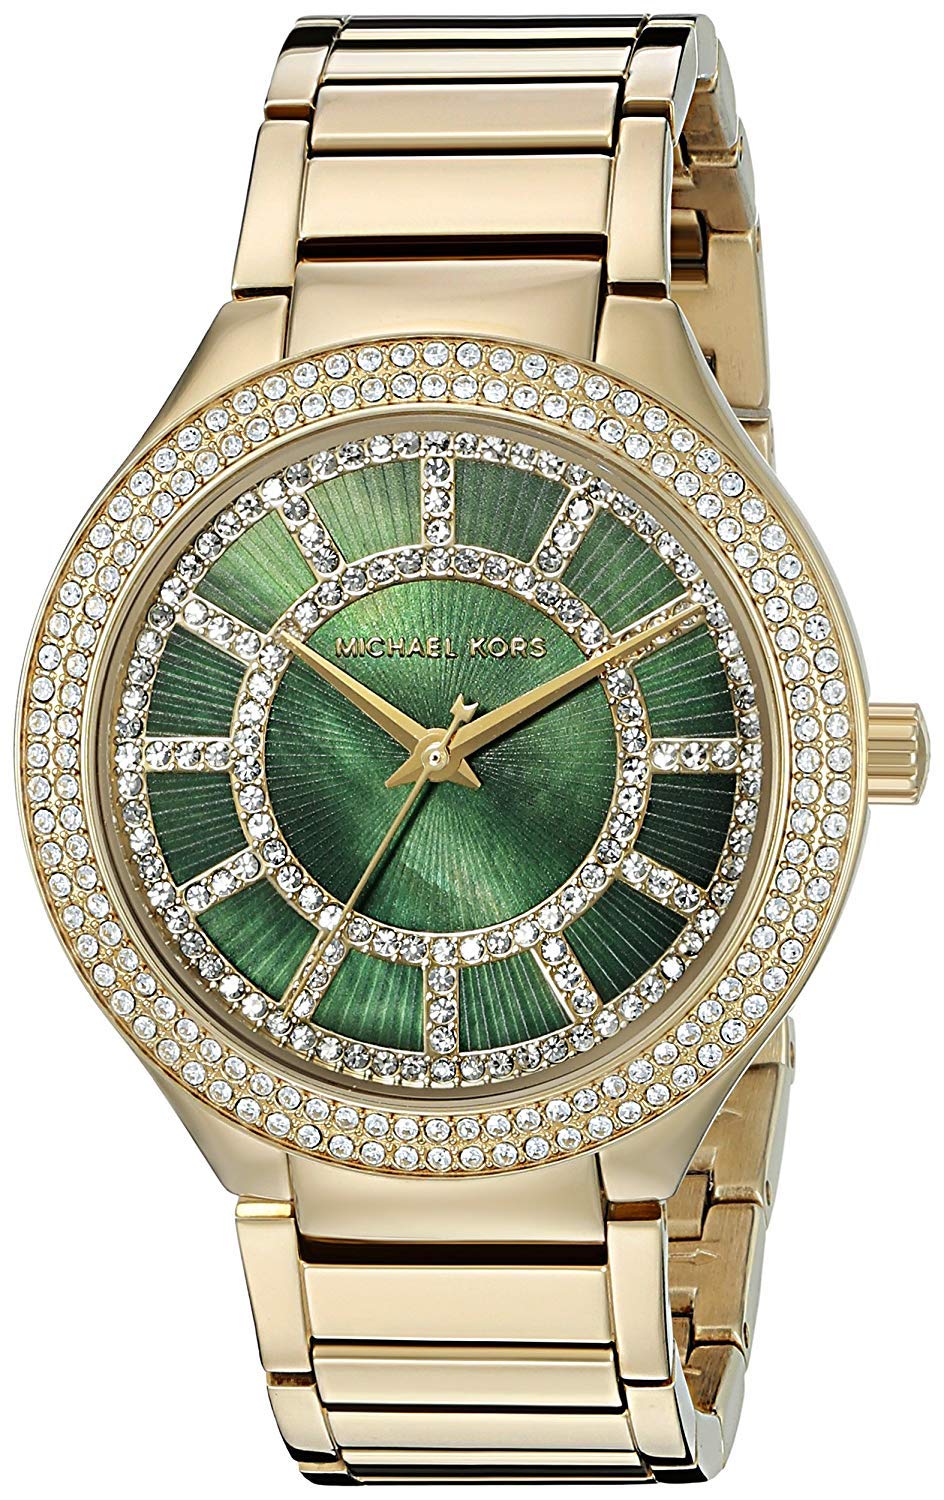 Michael Kors Women's Kerry Gold-Tone Watch MK3409